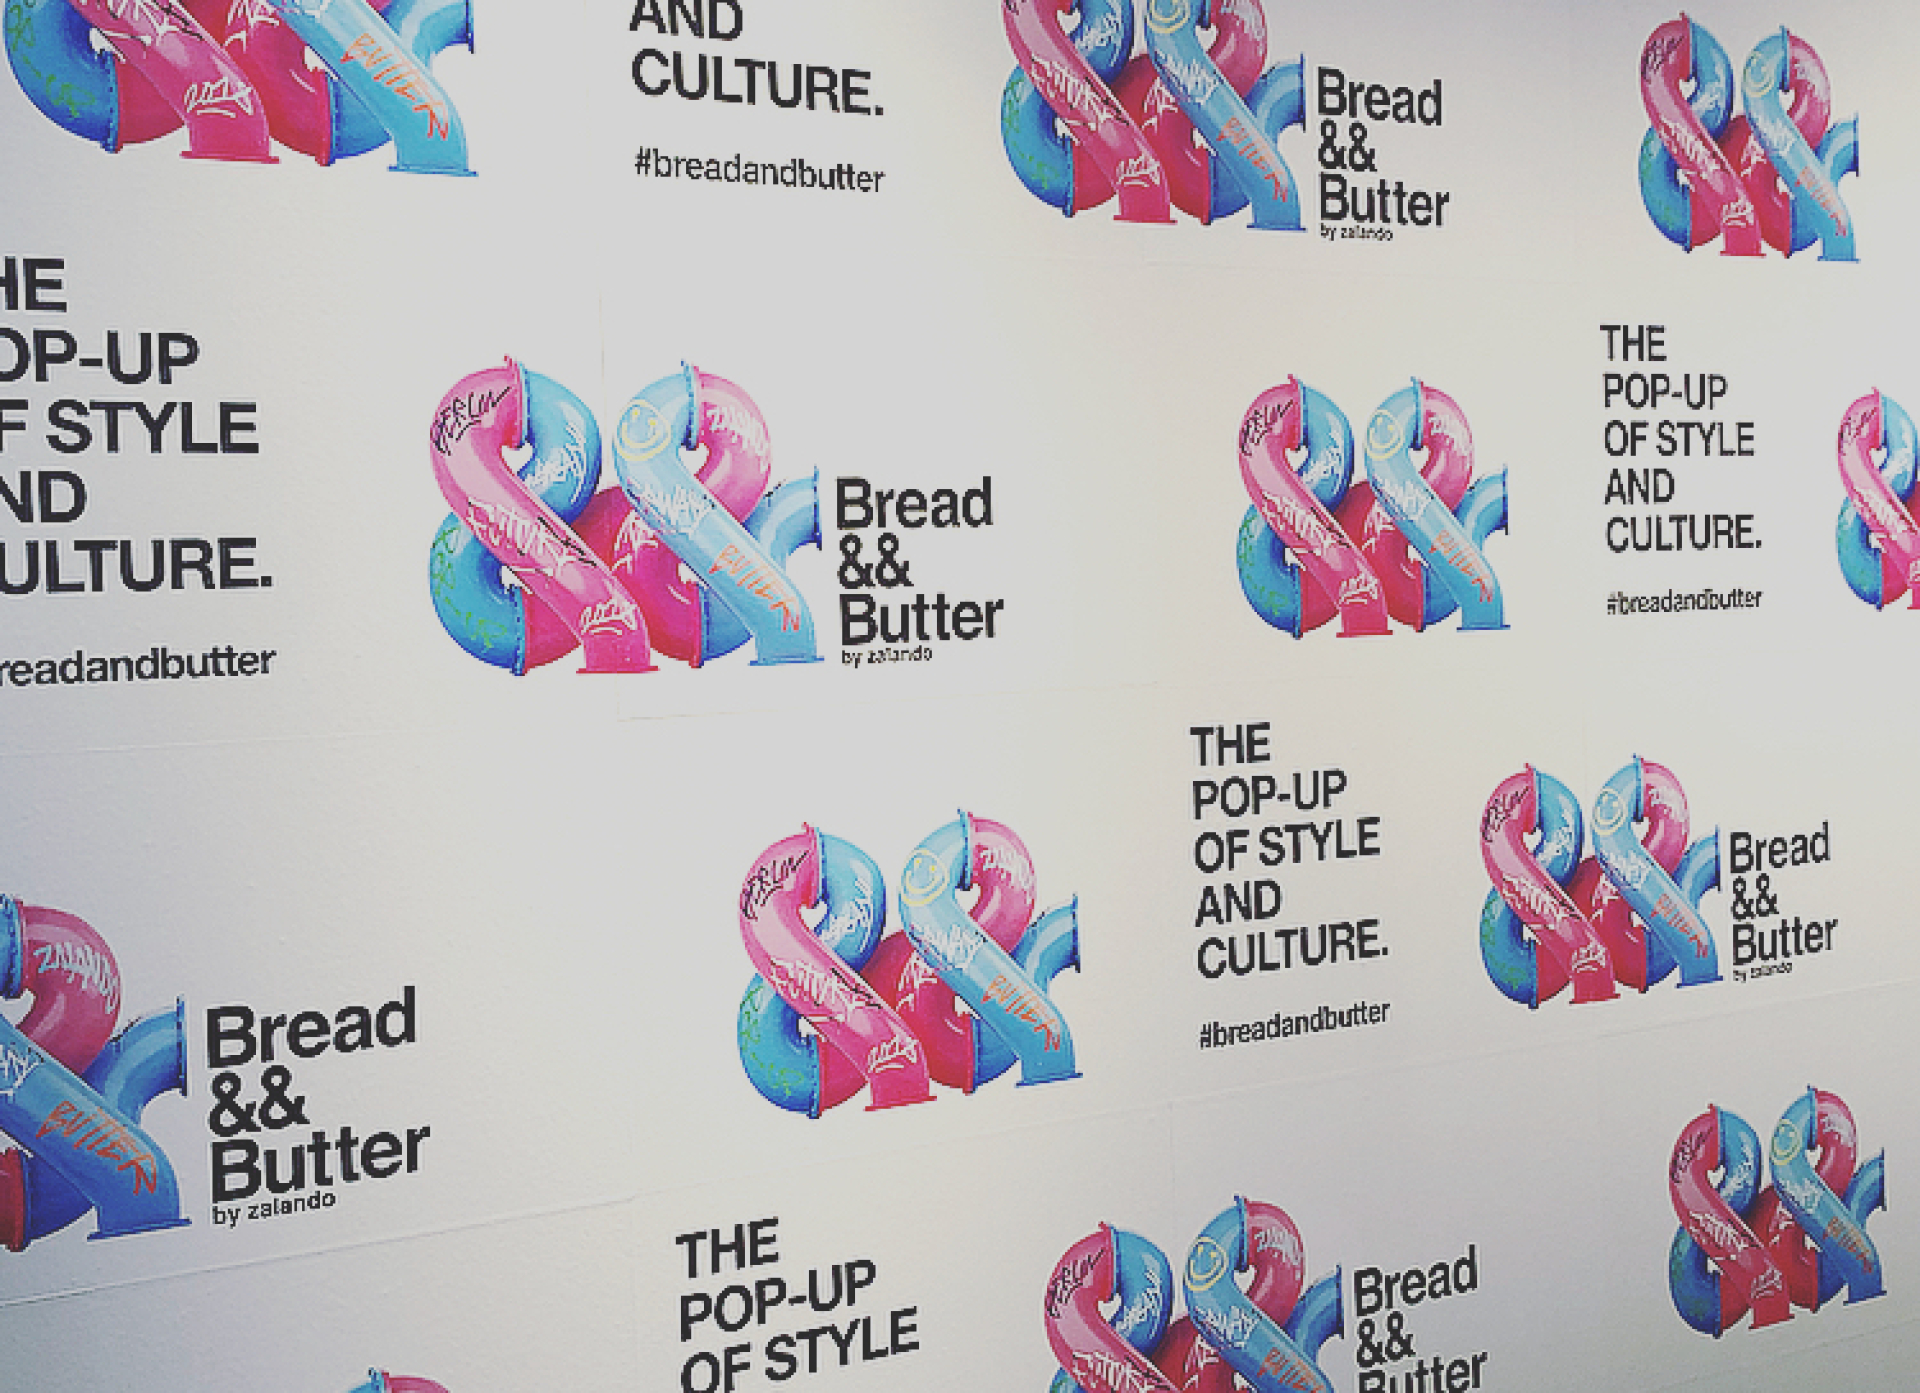 Popkultur, Street-Styles und junge Labels – so war die Bread && Butter by Zalando 2018